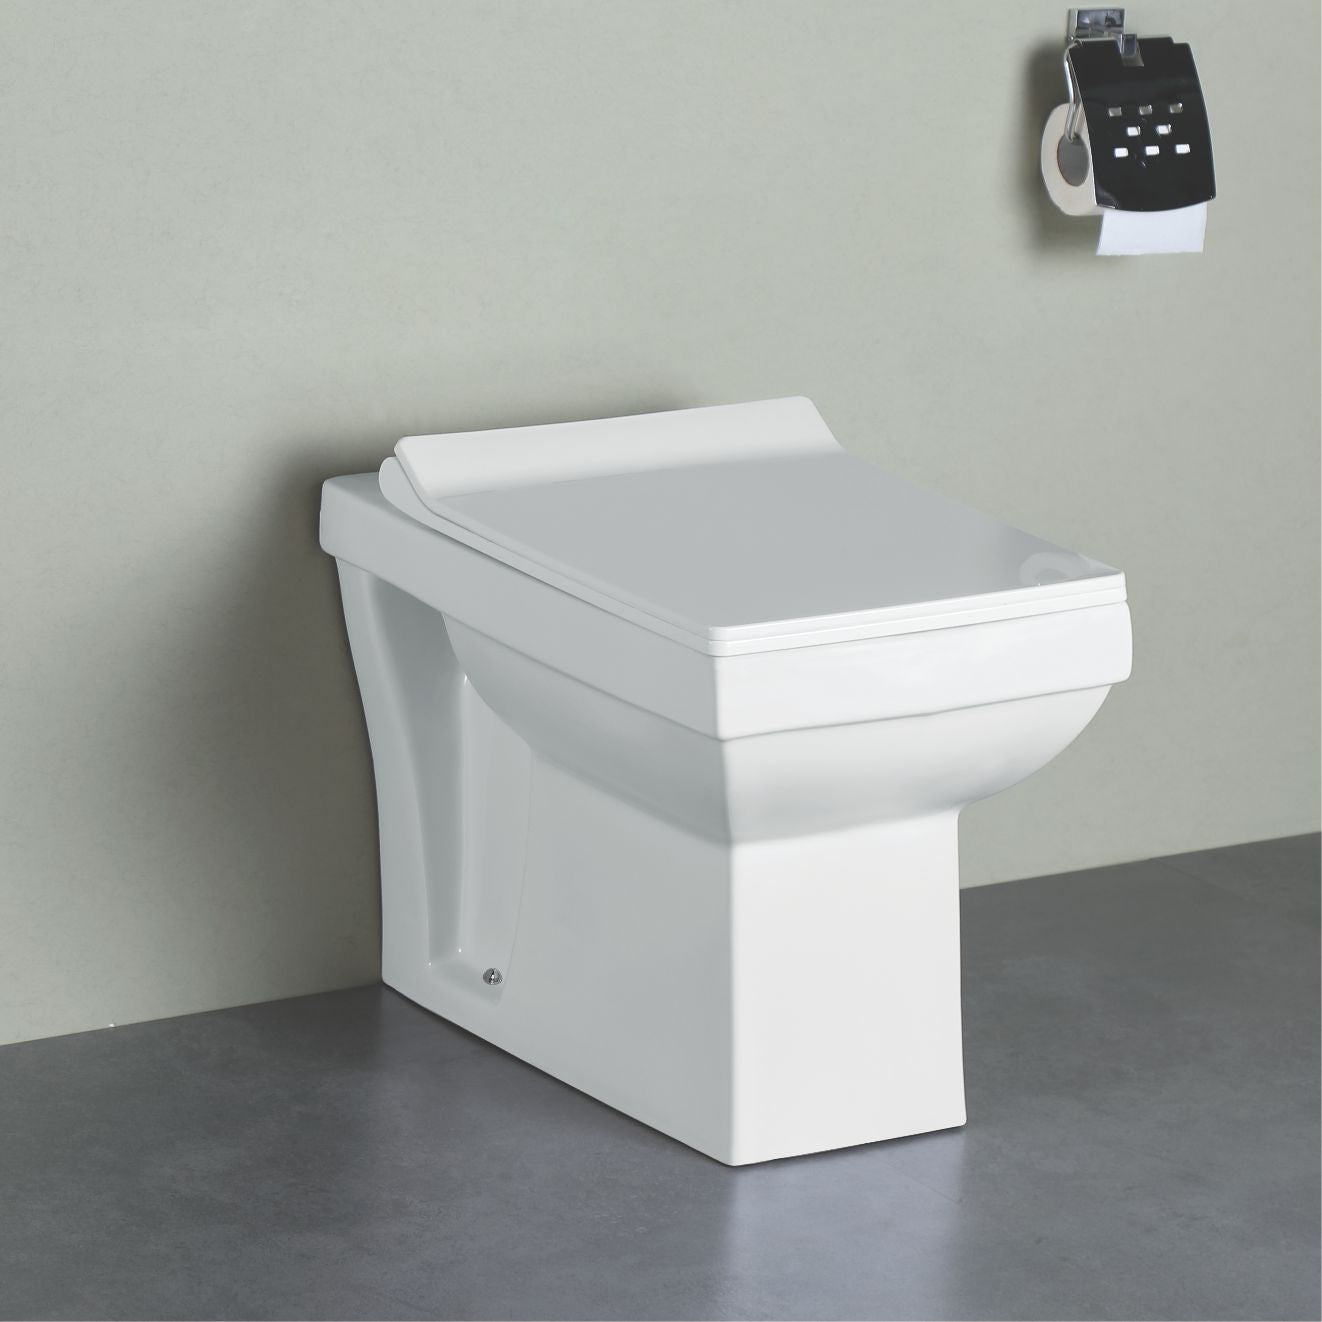 InArt EWC P Trap Ceramic Floor Mounted European Western Water Closet Toilet Commode White - InArt-Studio